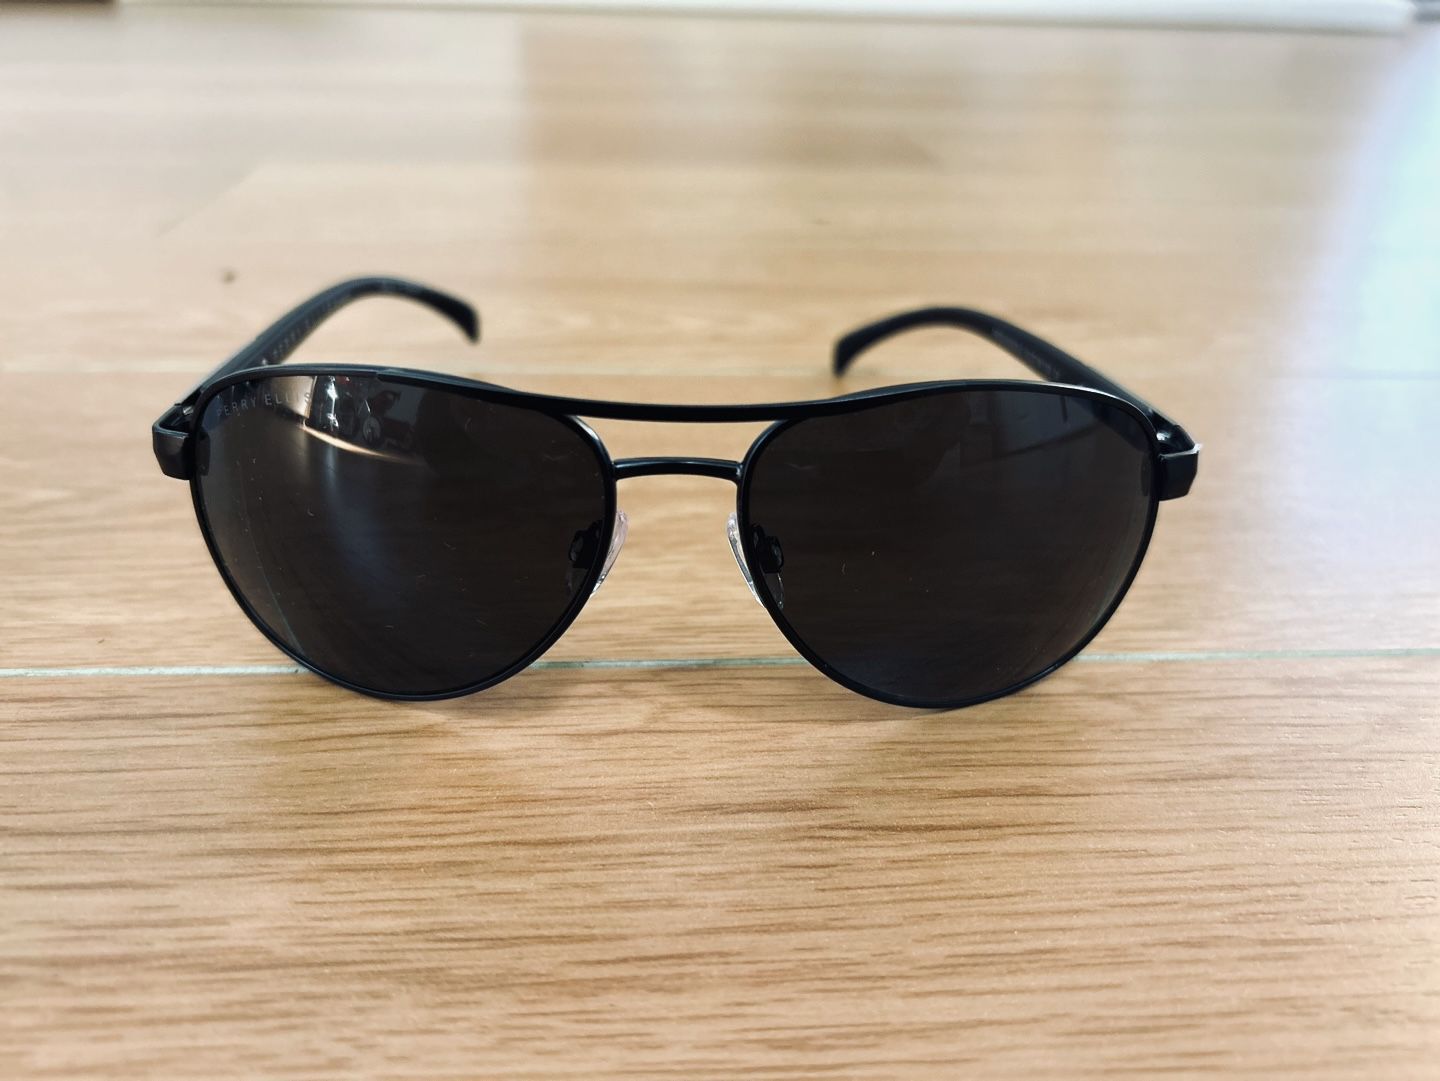 Perry Ellis Sunglasses ($20)